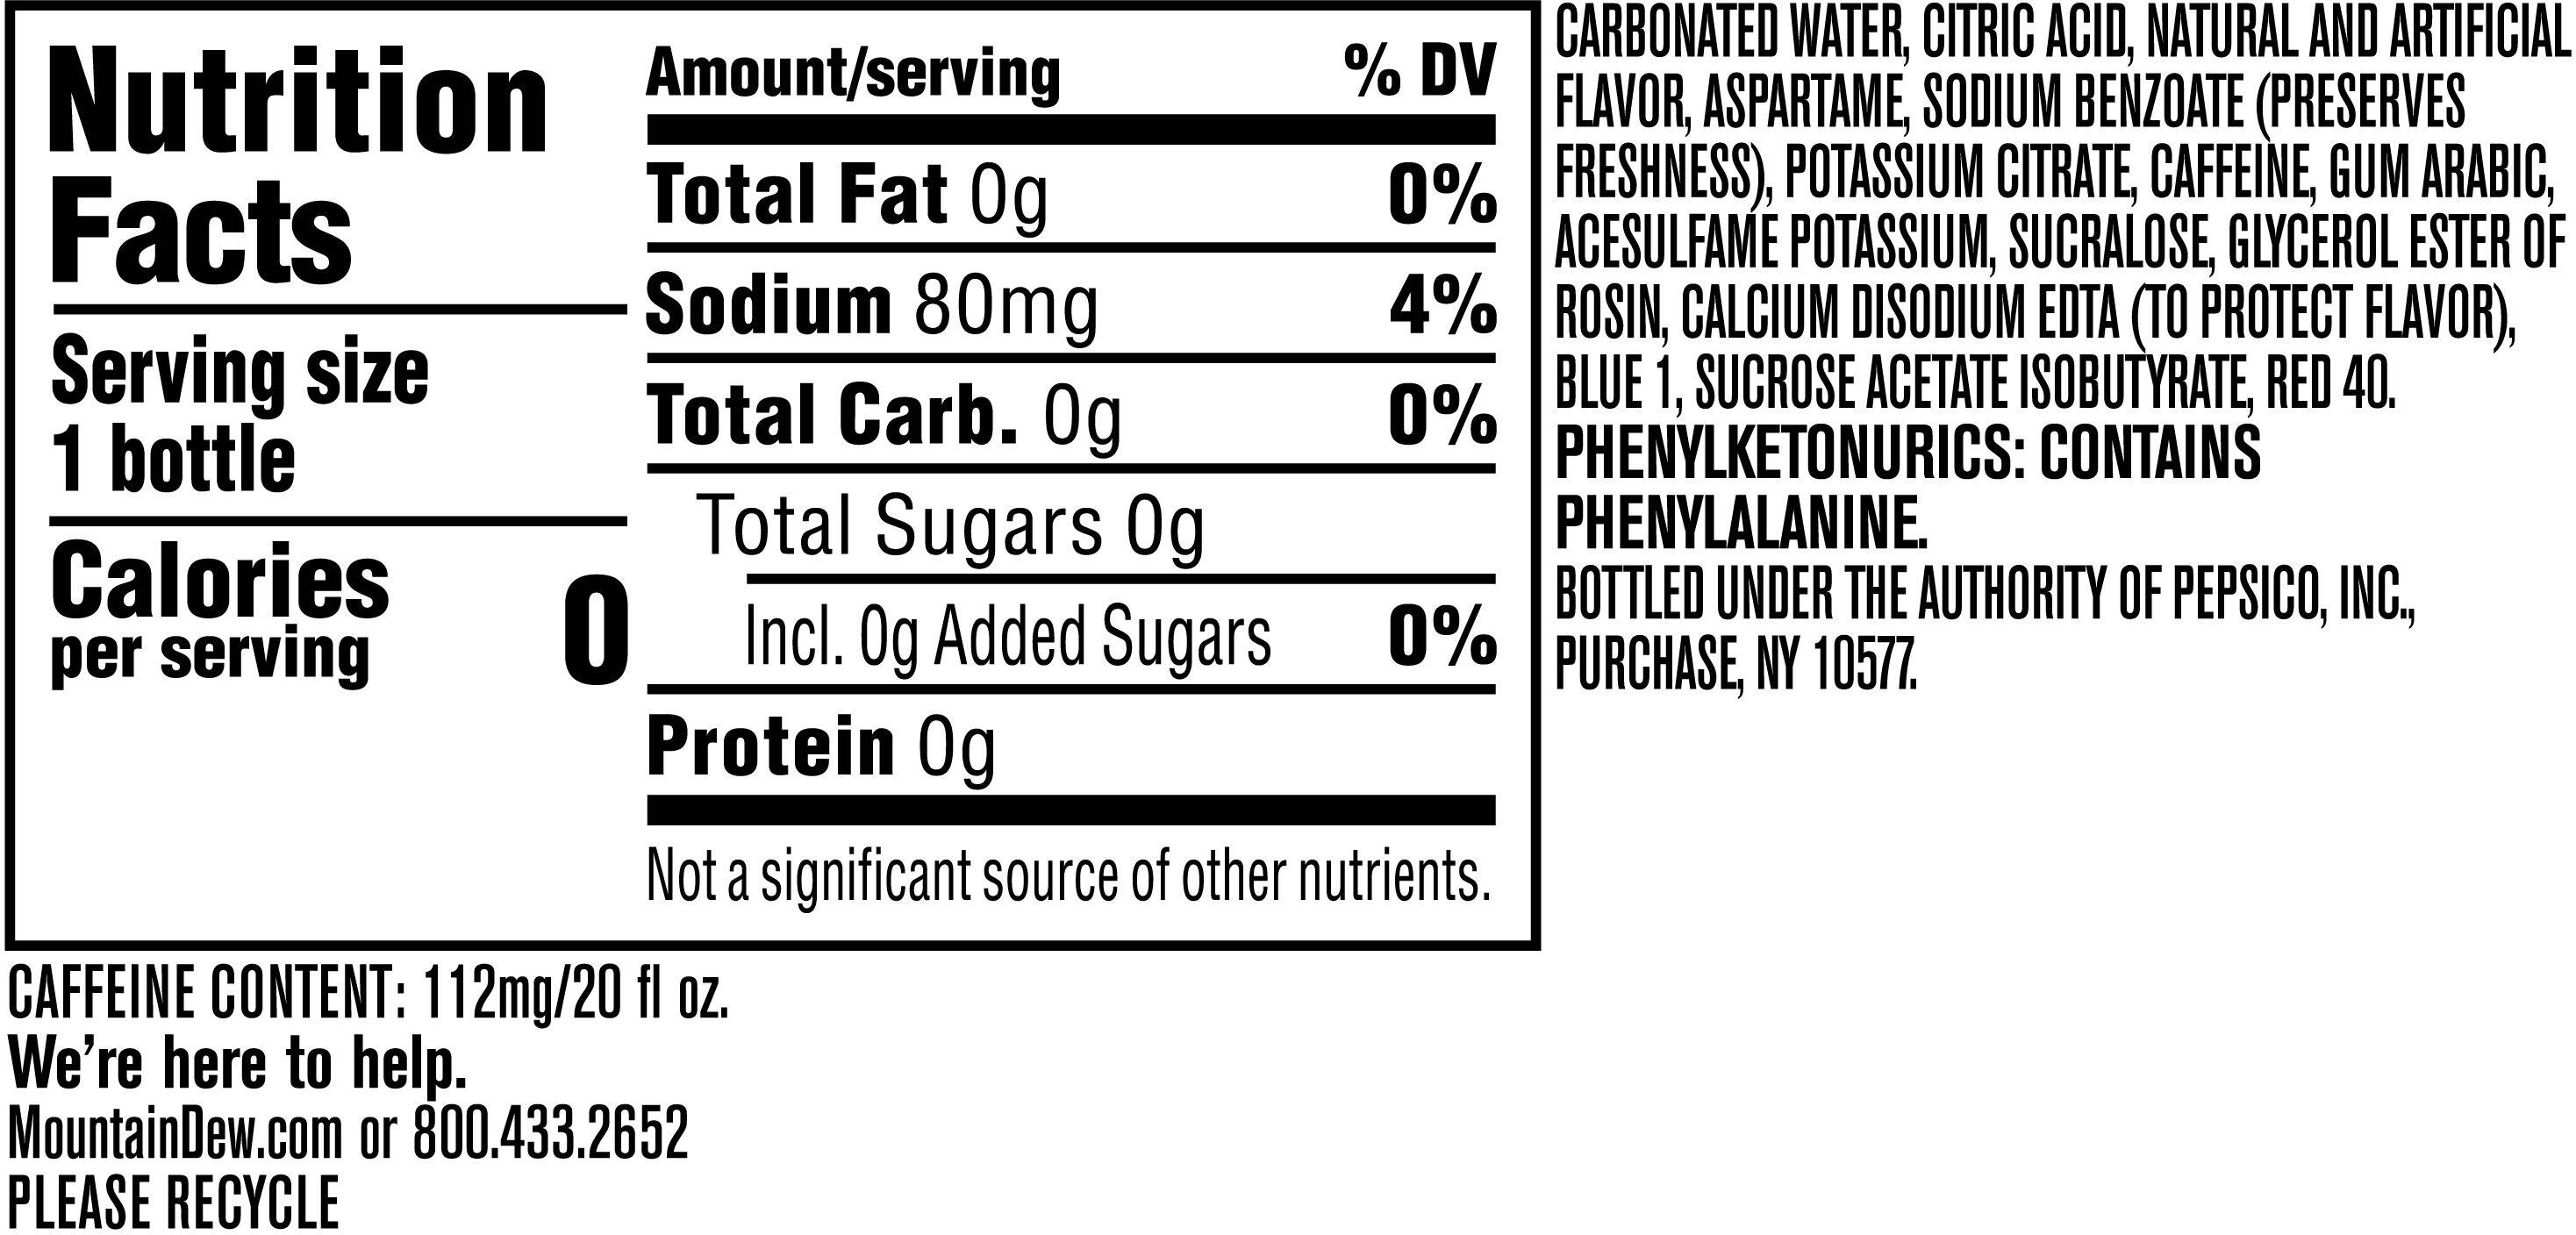 Image describing nutrition information for product Mtn Dew Frost Bite Zero Sugar